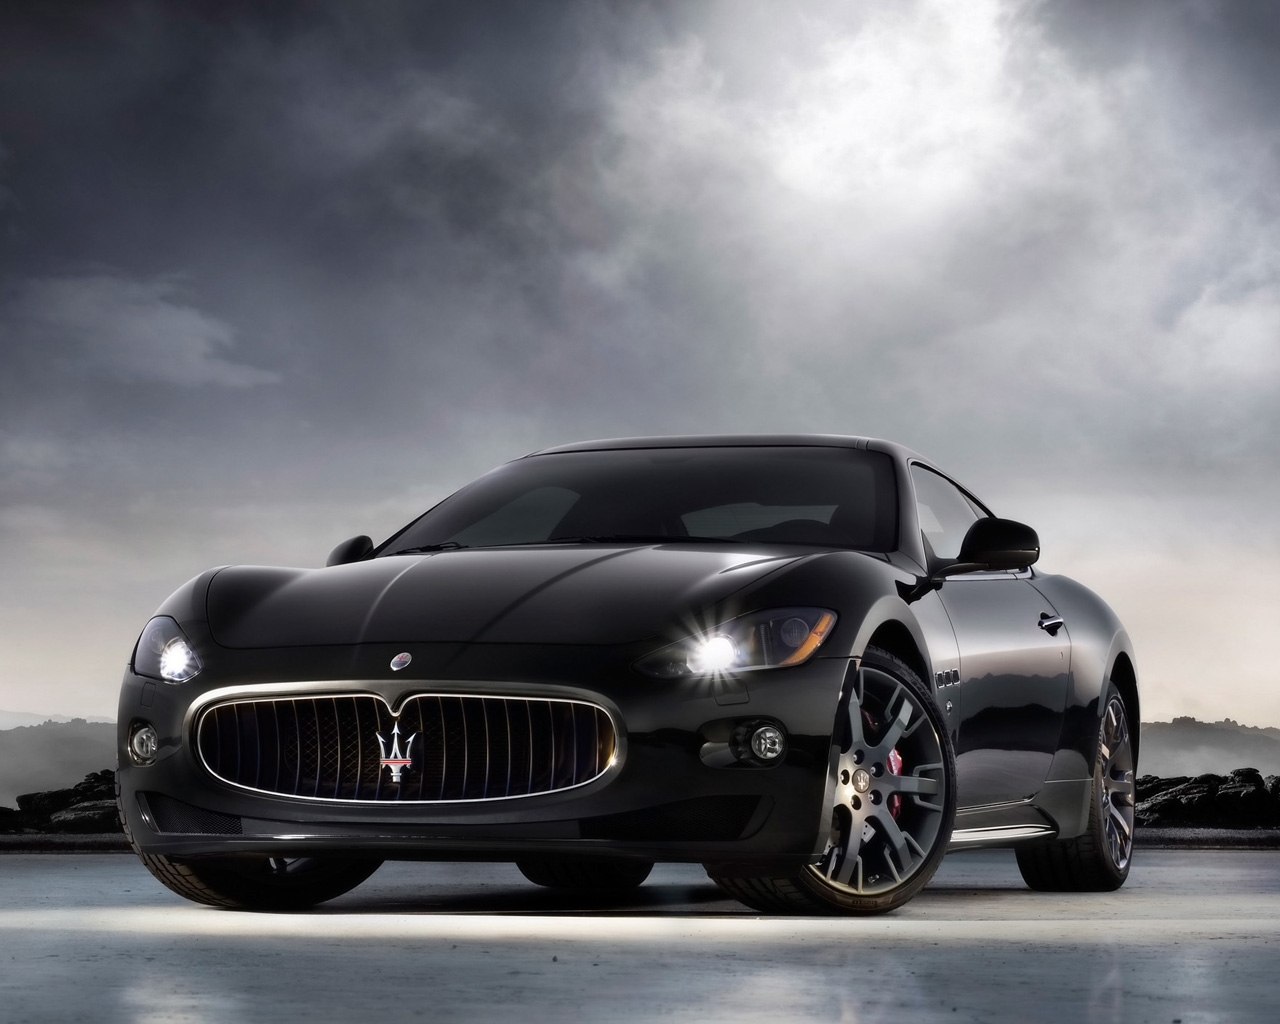 Descarga gratuita de fondo de pantalla para móvil de Transporte, Automóvil, Maserati.